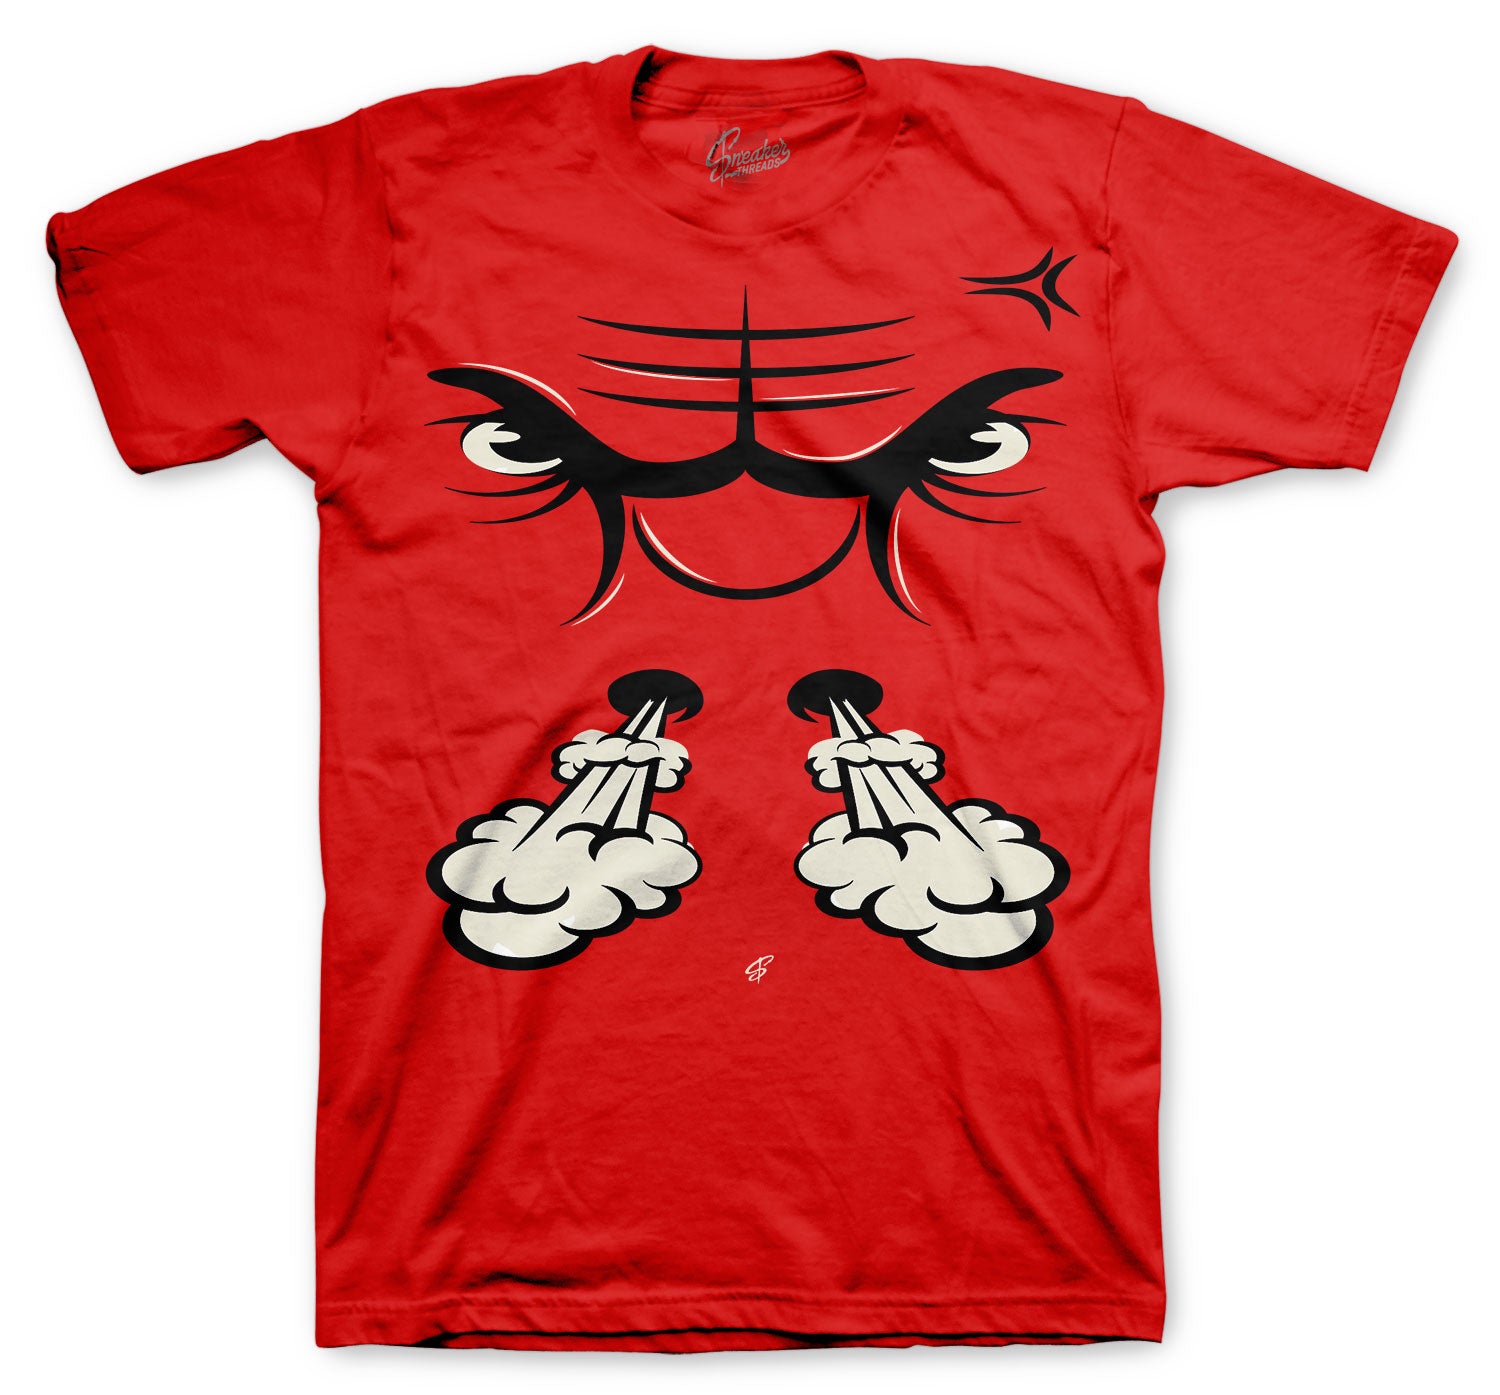 Retro 12 Super Bowl Shirt - Raging face - Red